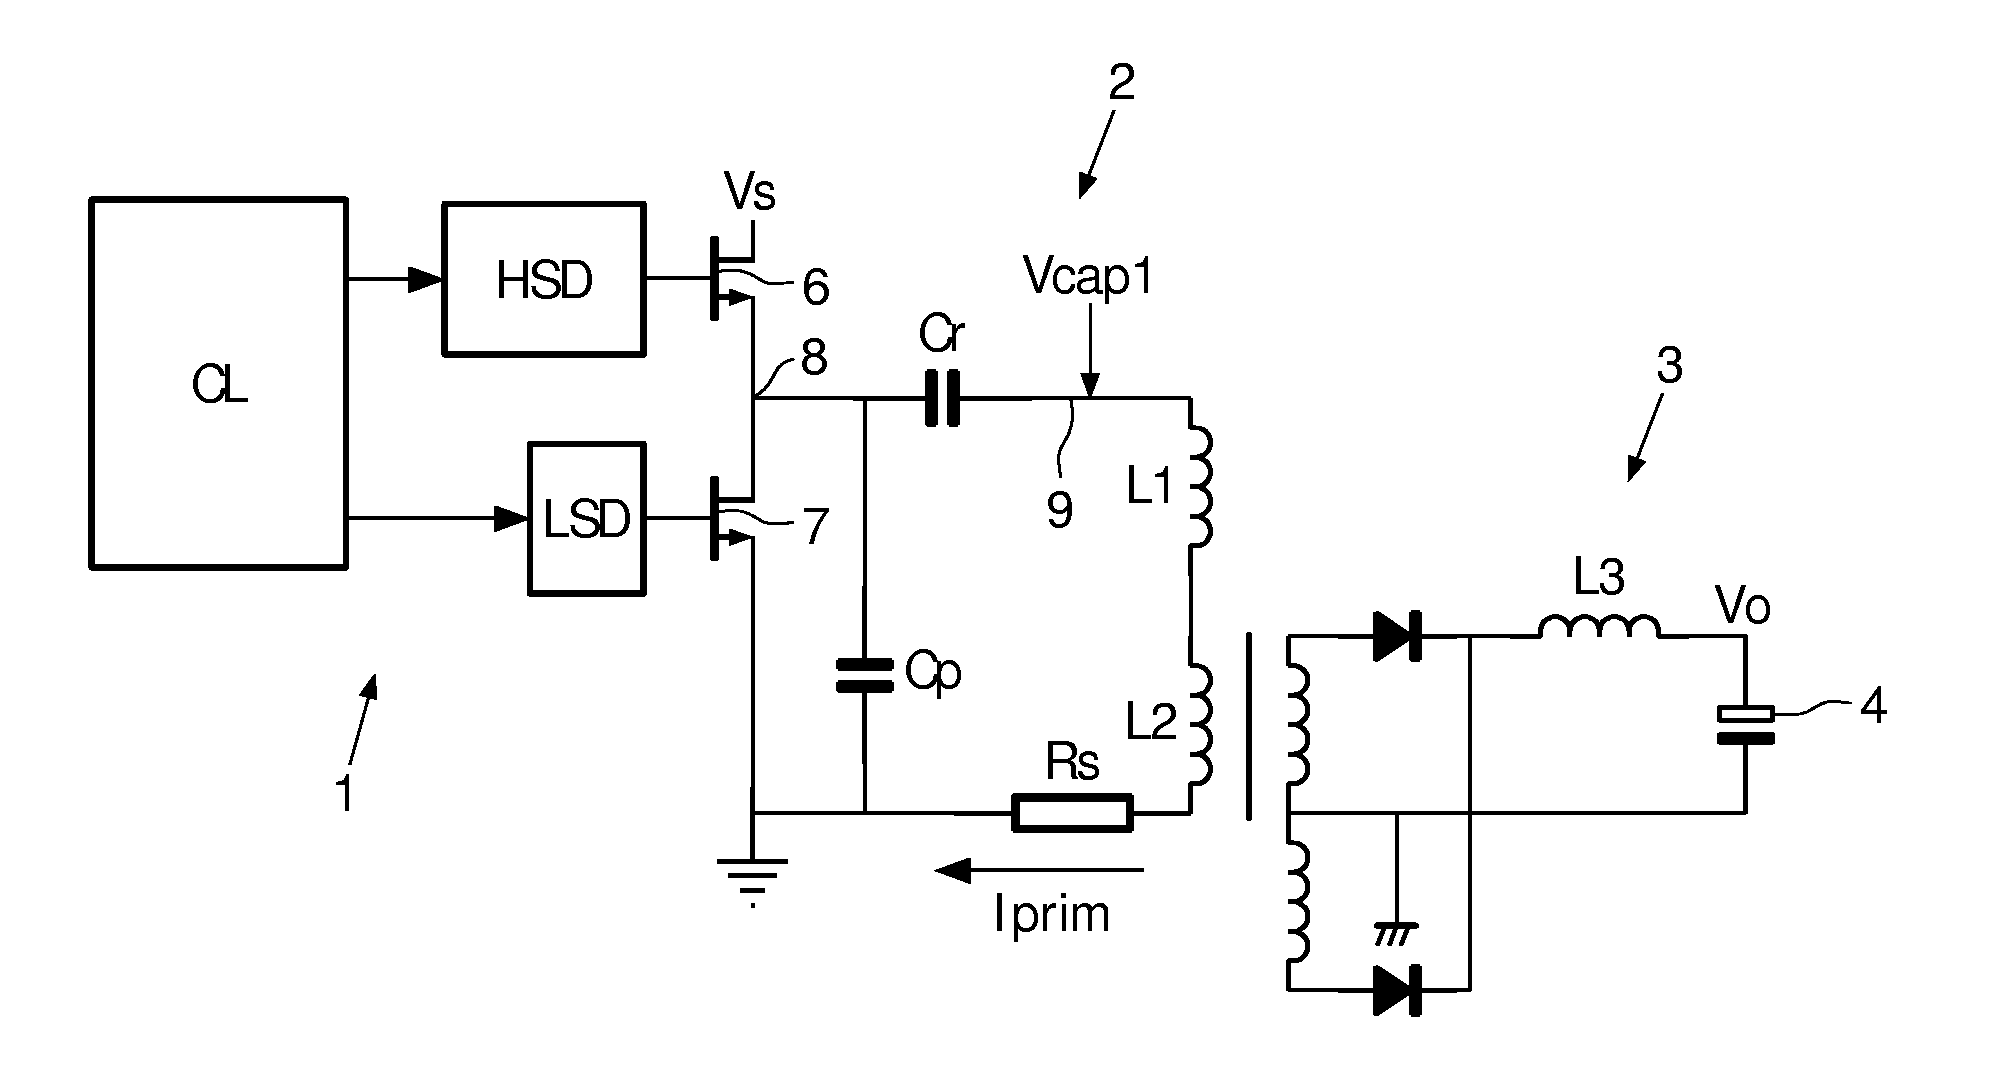 Control of a resonant converter